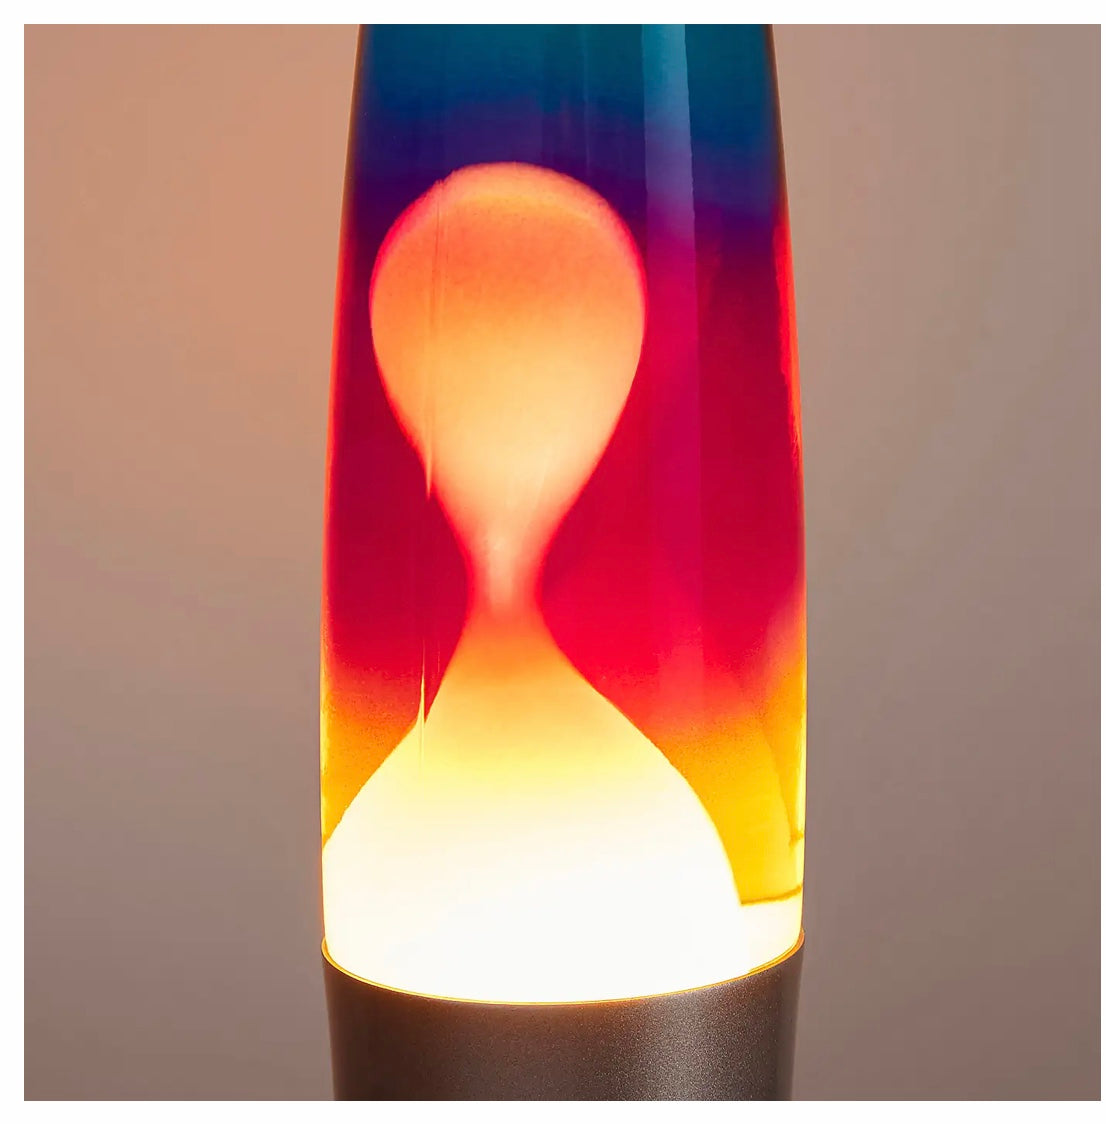 RAINBOW 16" LAVA LAMP BY LINX